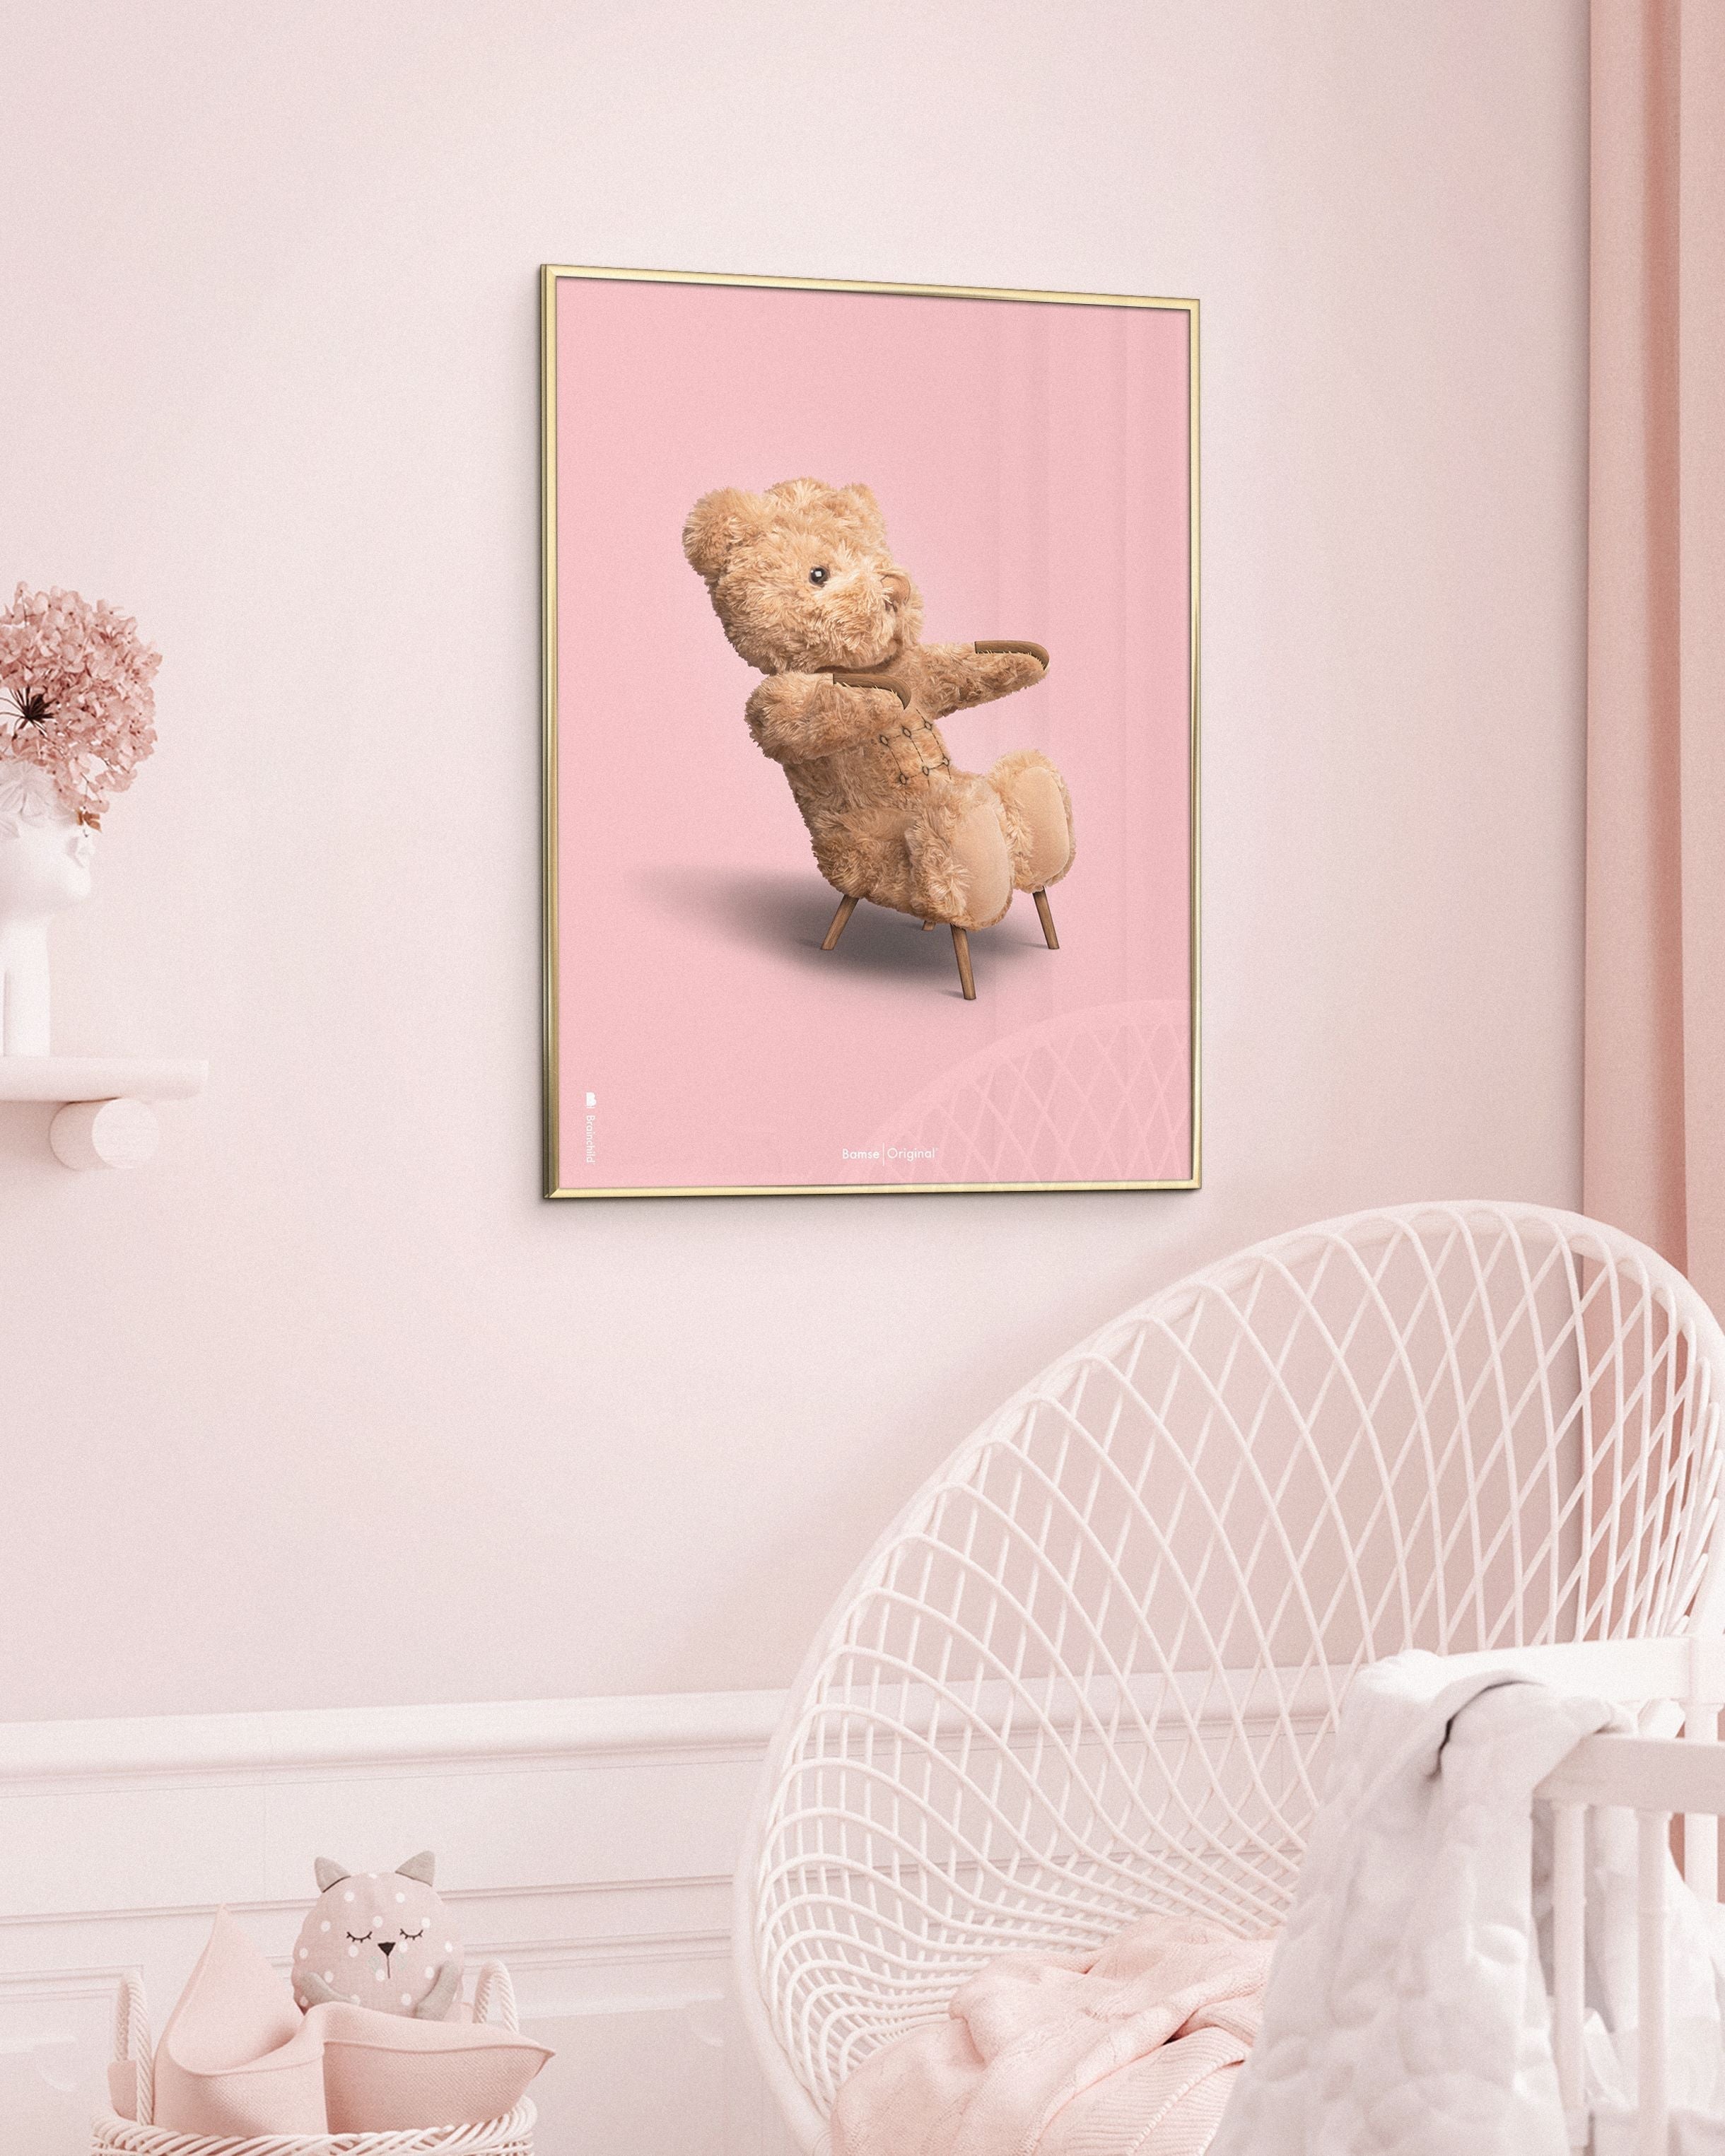 Brainchild Teddy Bear Classic plakát mosazný barevný rám 70x100 cm, růžové pozadí